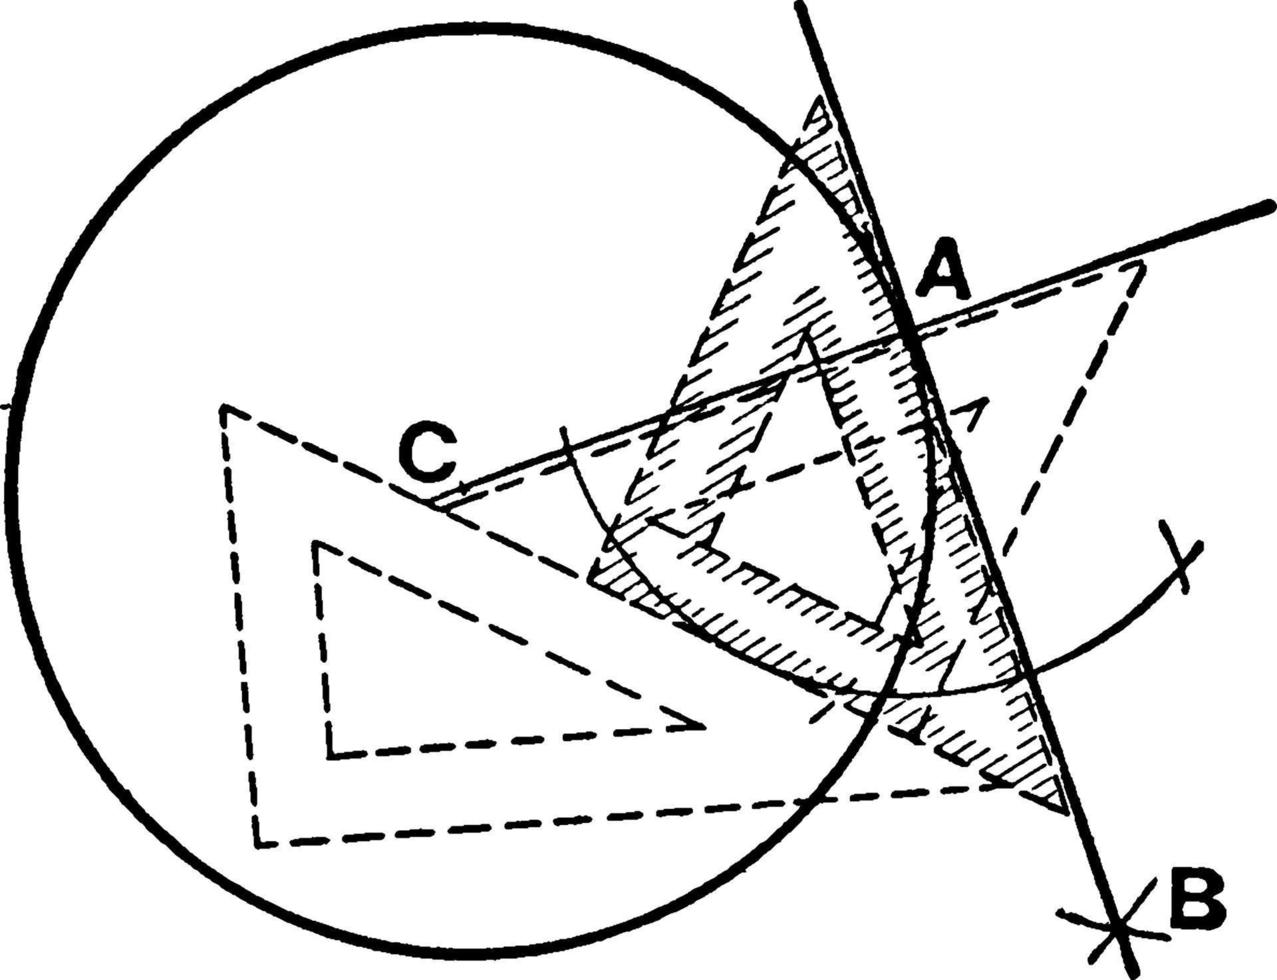 tangente a un círculo, ilustración antigua. vector